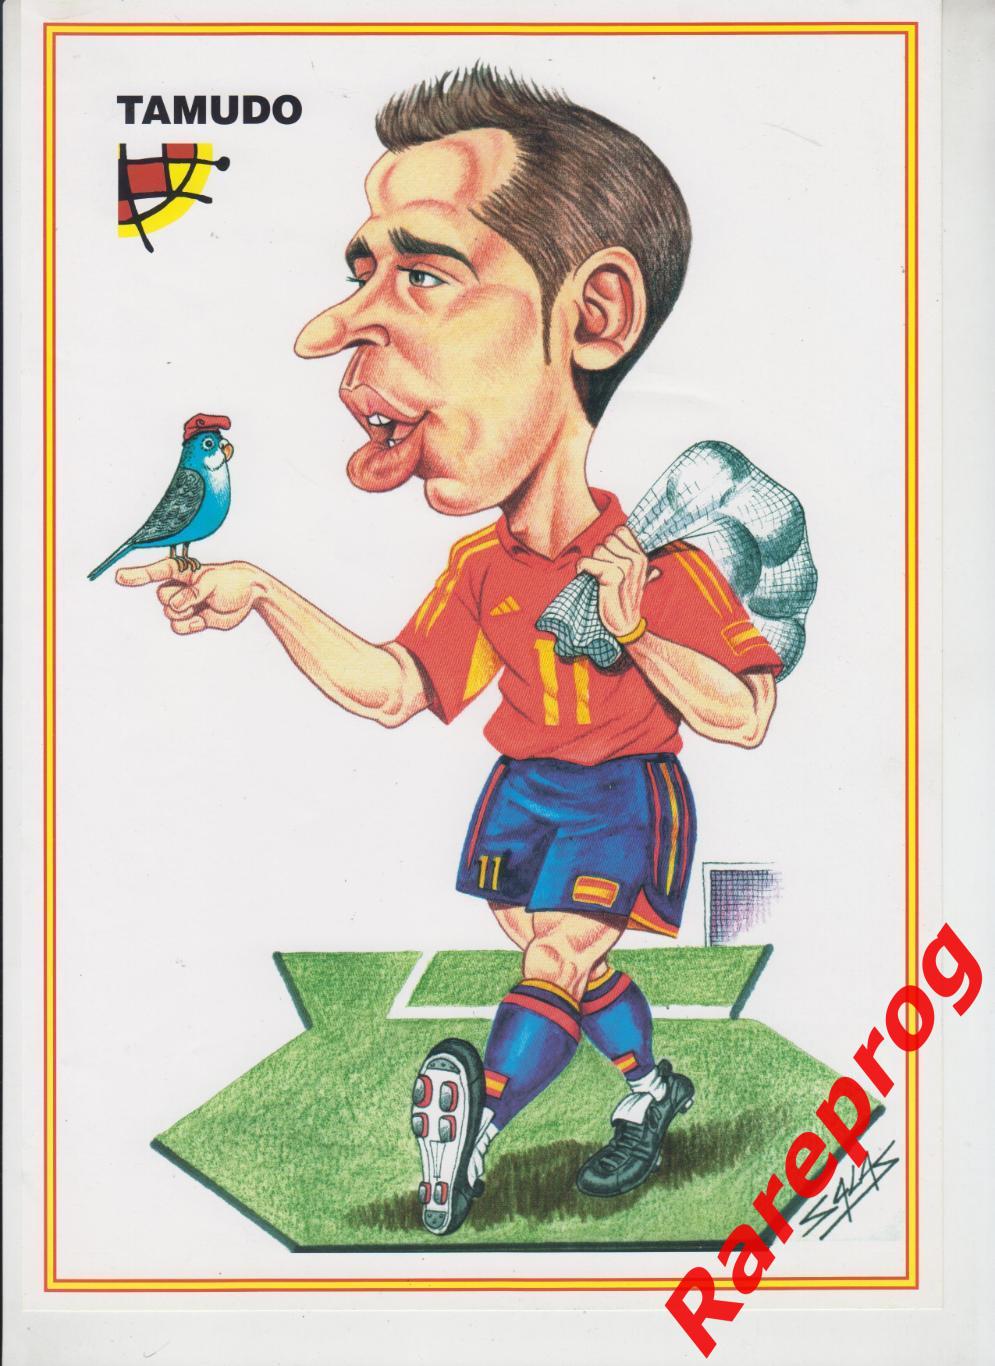 журнал Футбол RFEF Испания № 66 сентябрь 2004 - постер Tamudo 1